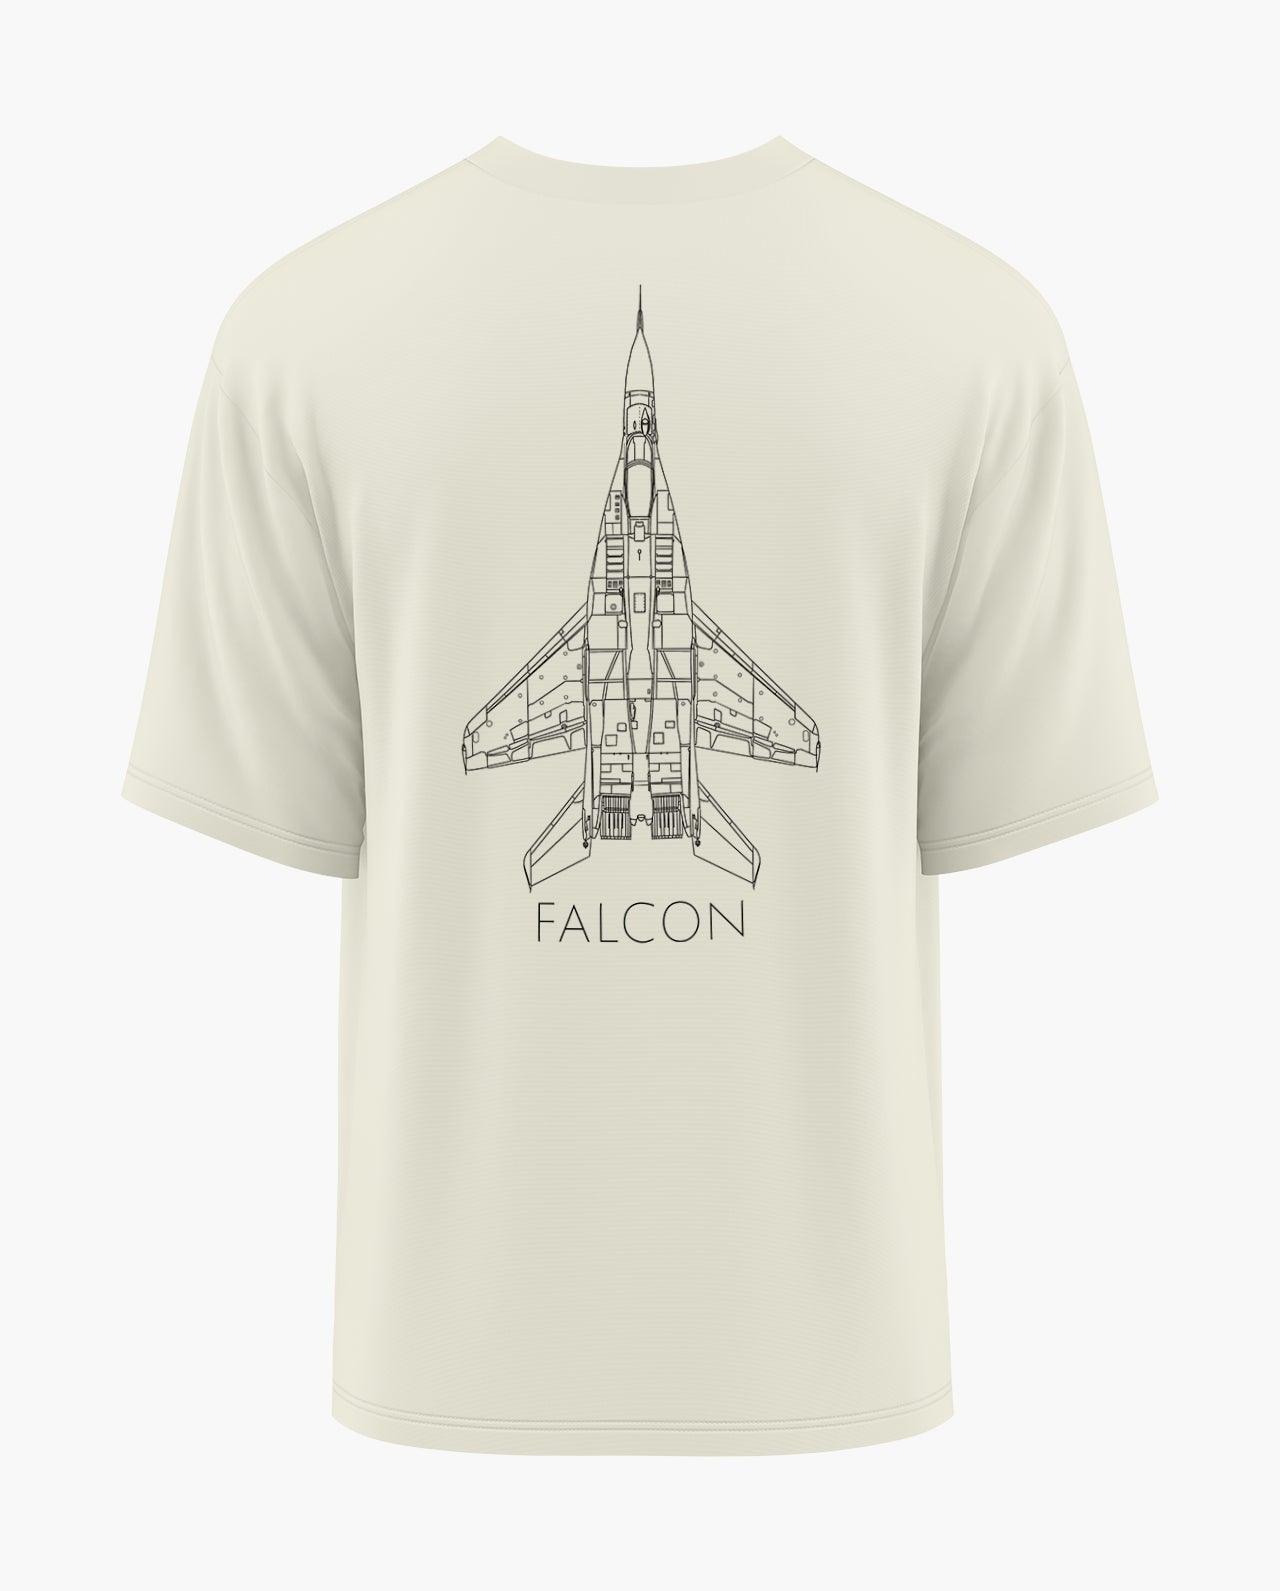 MIG 29 Falcon Oversized T-Shirt - Aero Armour